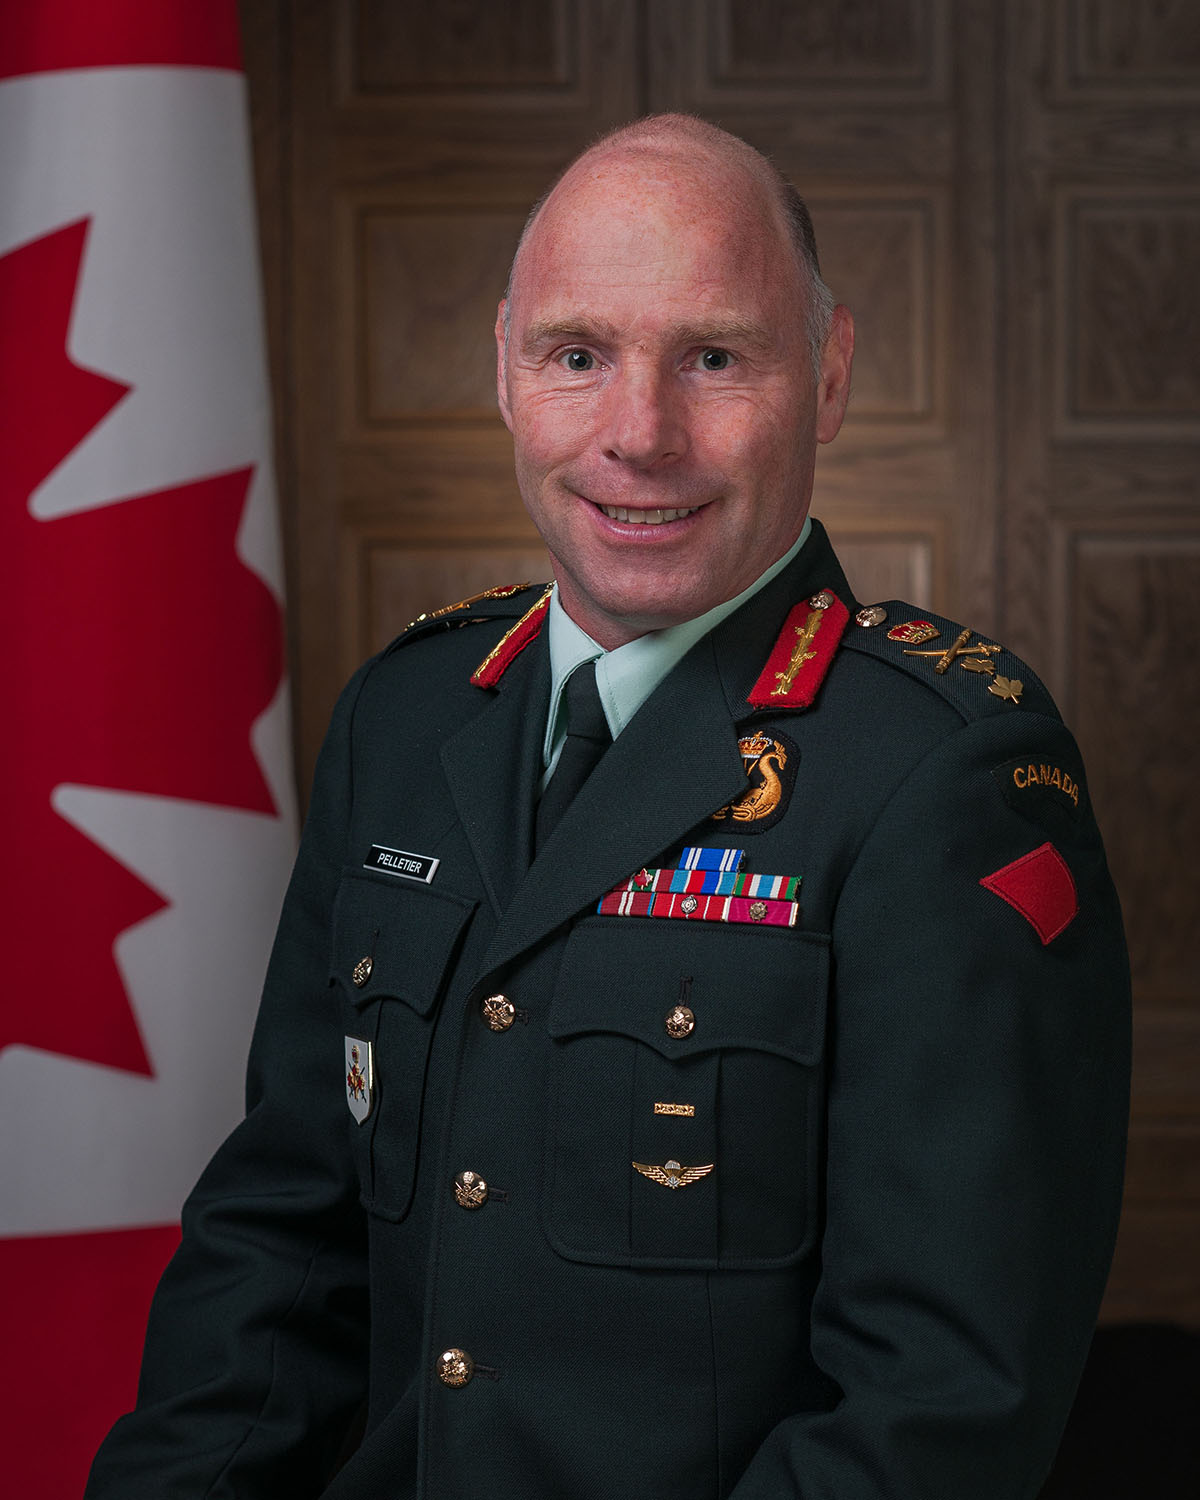 Major-General Pelletier